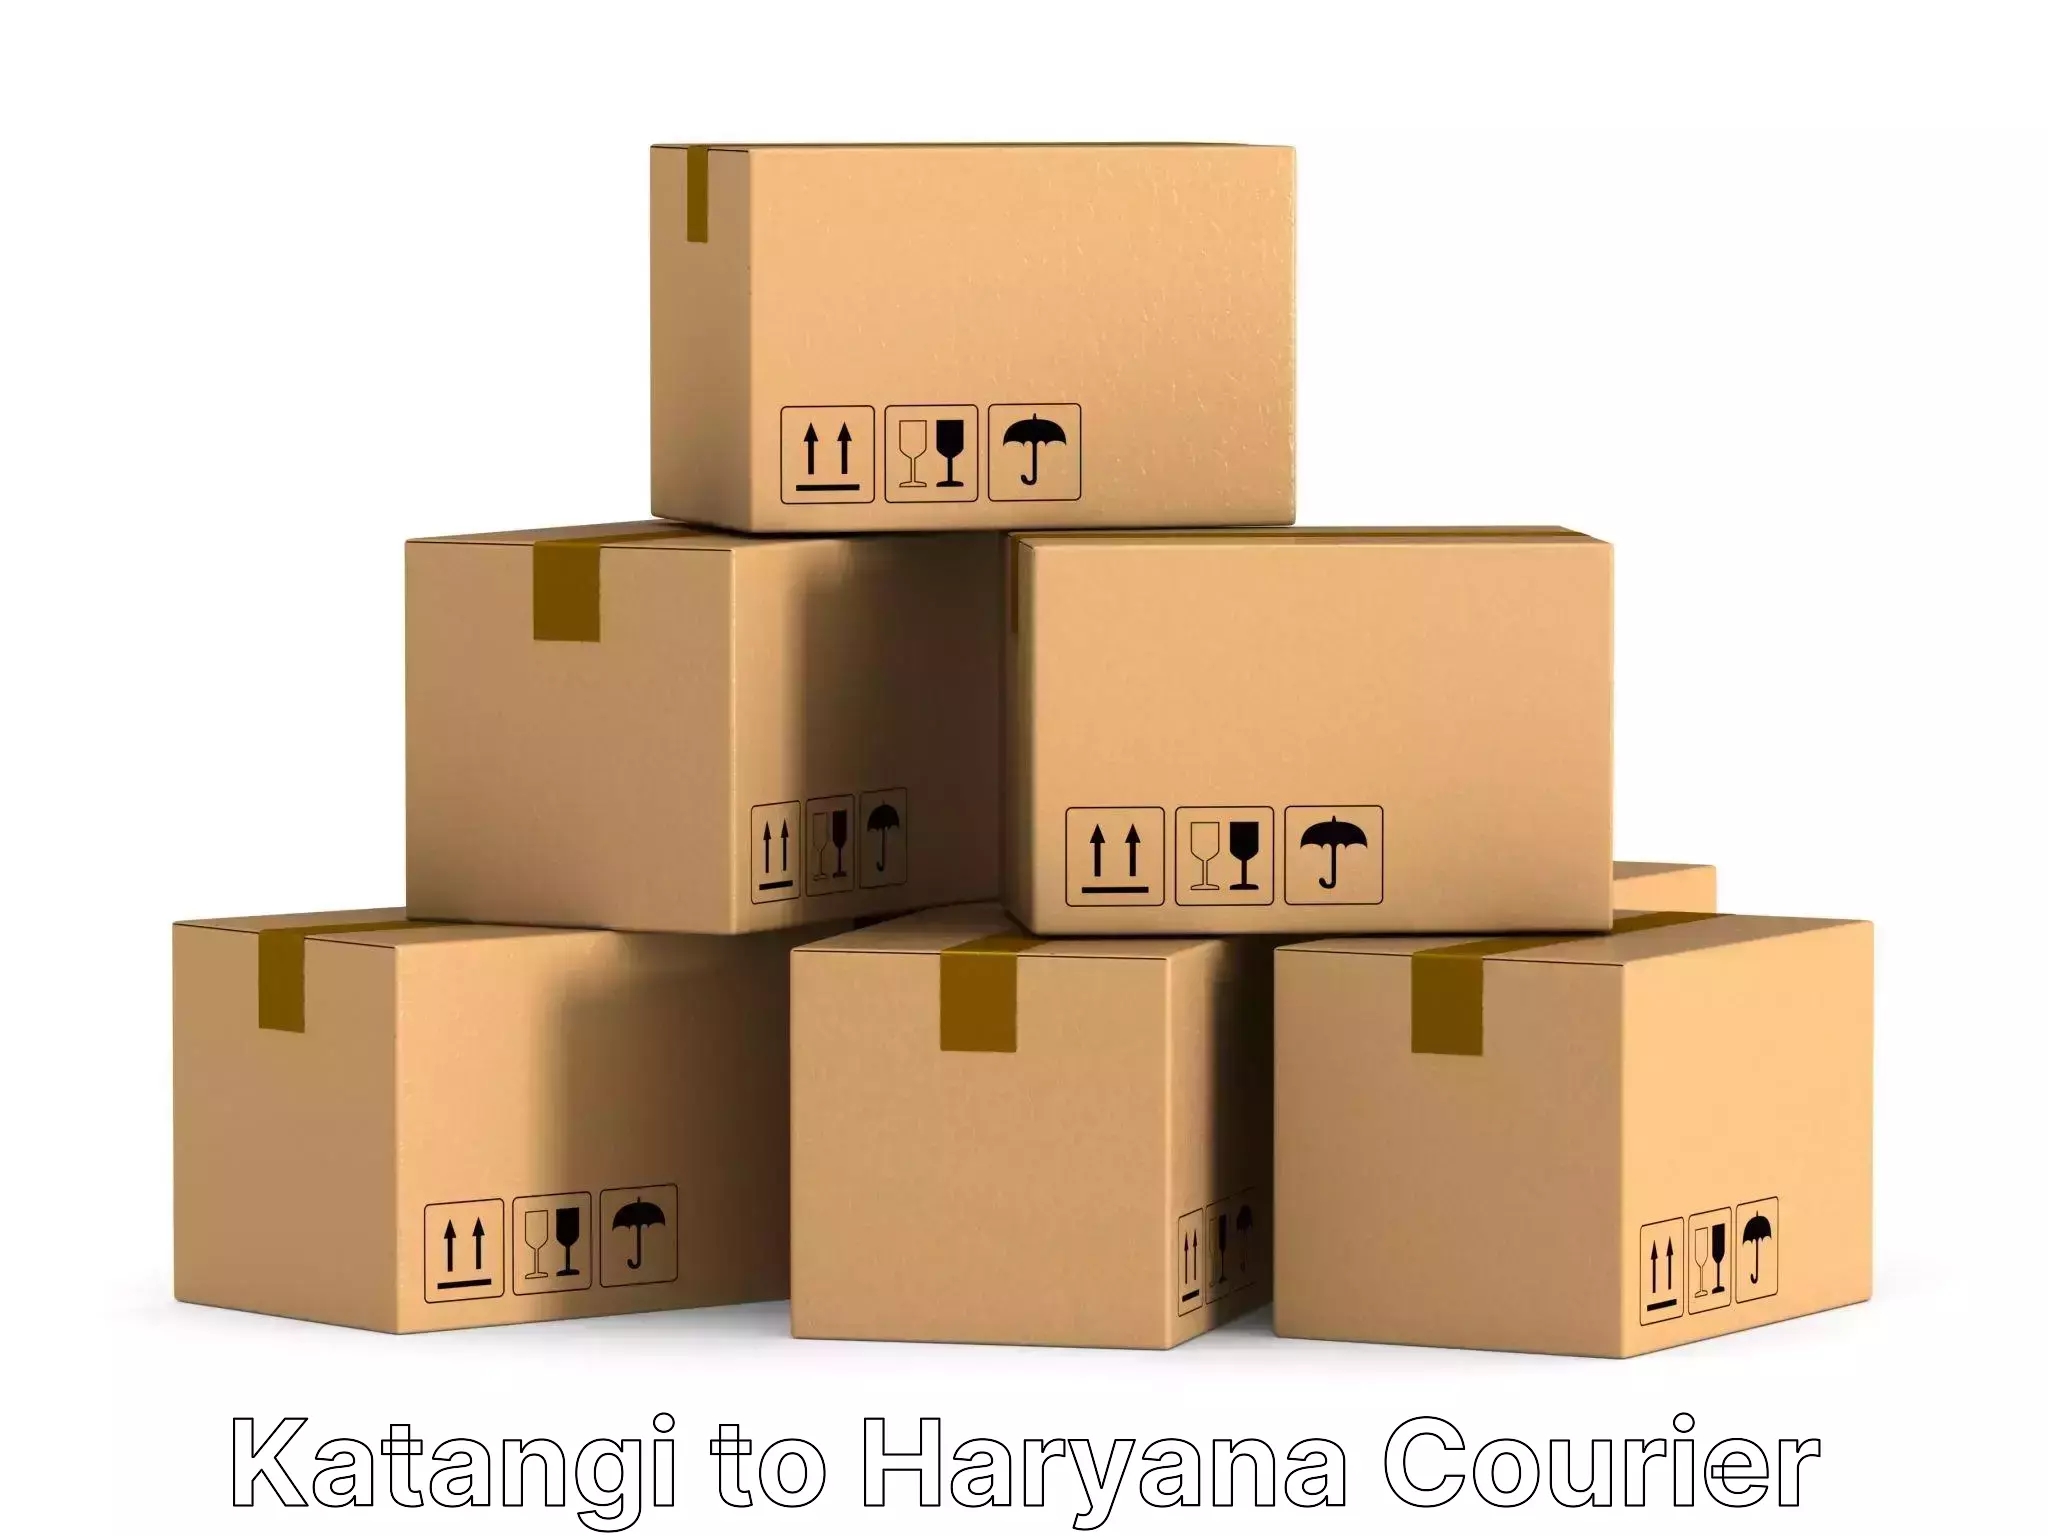 Moving service excellence Katangi to Narwana